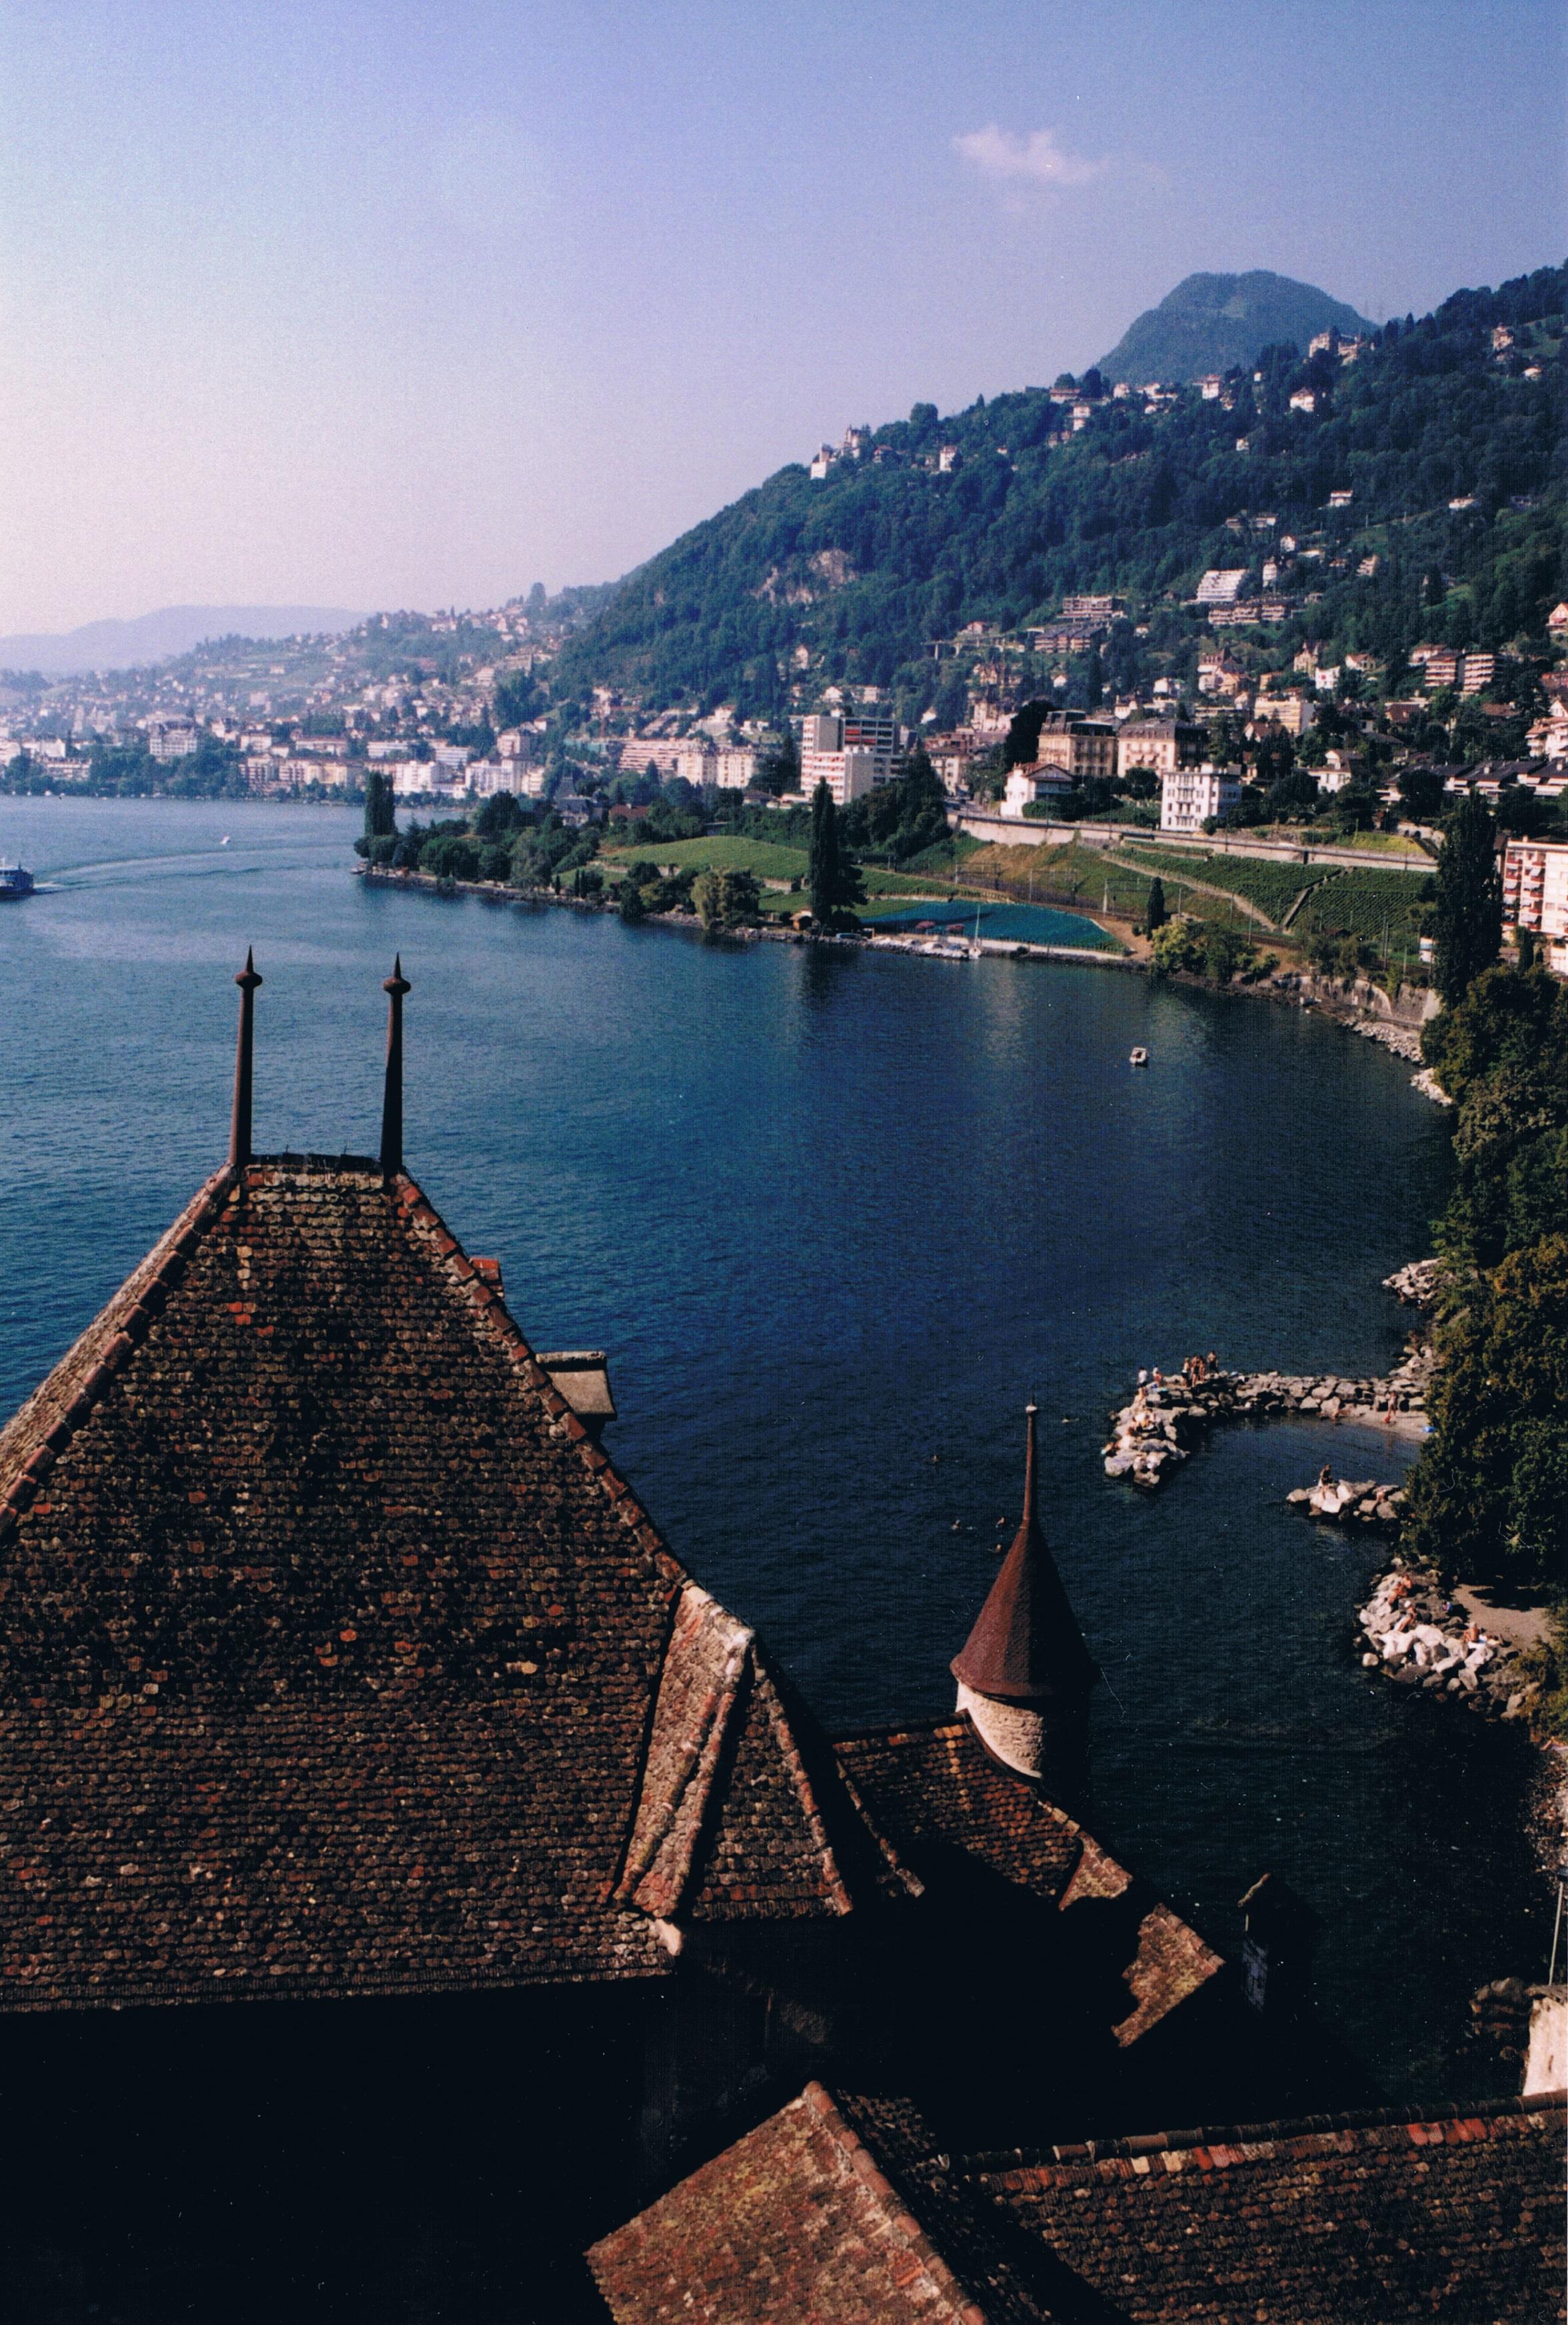 View from Tante Hélène's